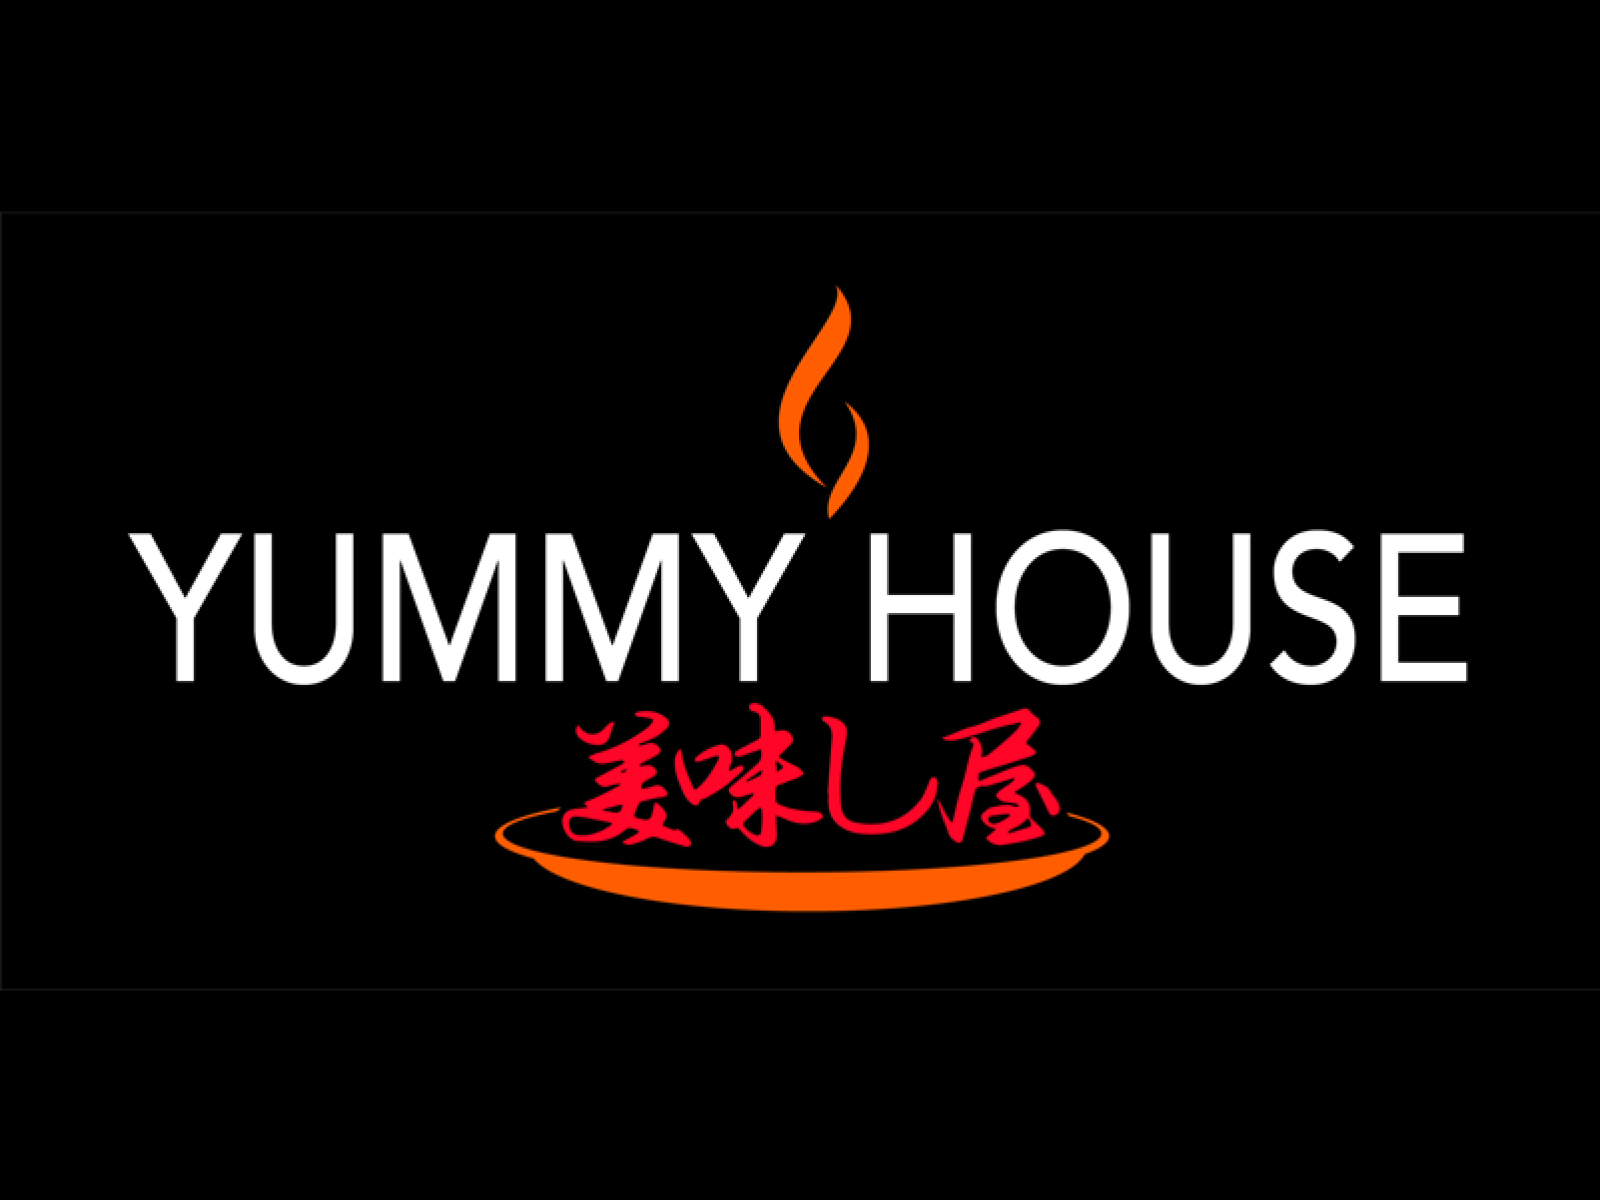 Main image for business titled Yummy House - Sushi & Ramen Japanese Restaurant